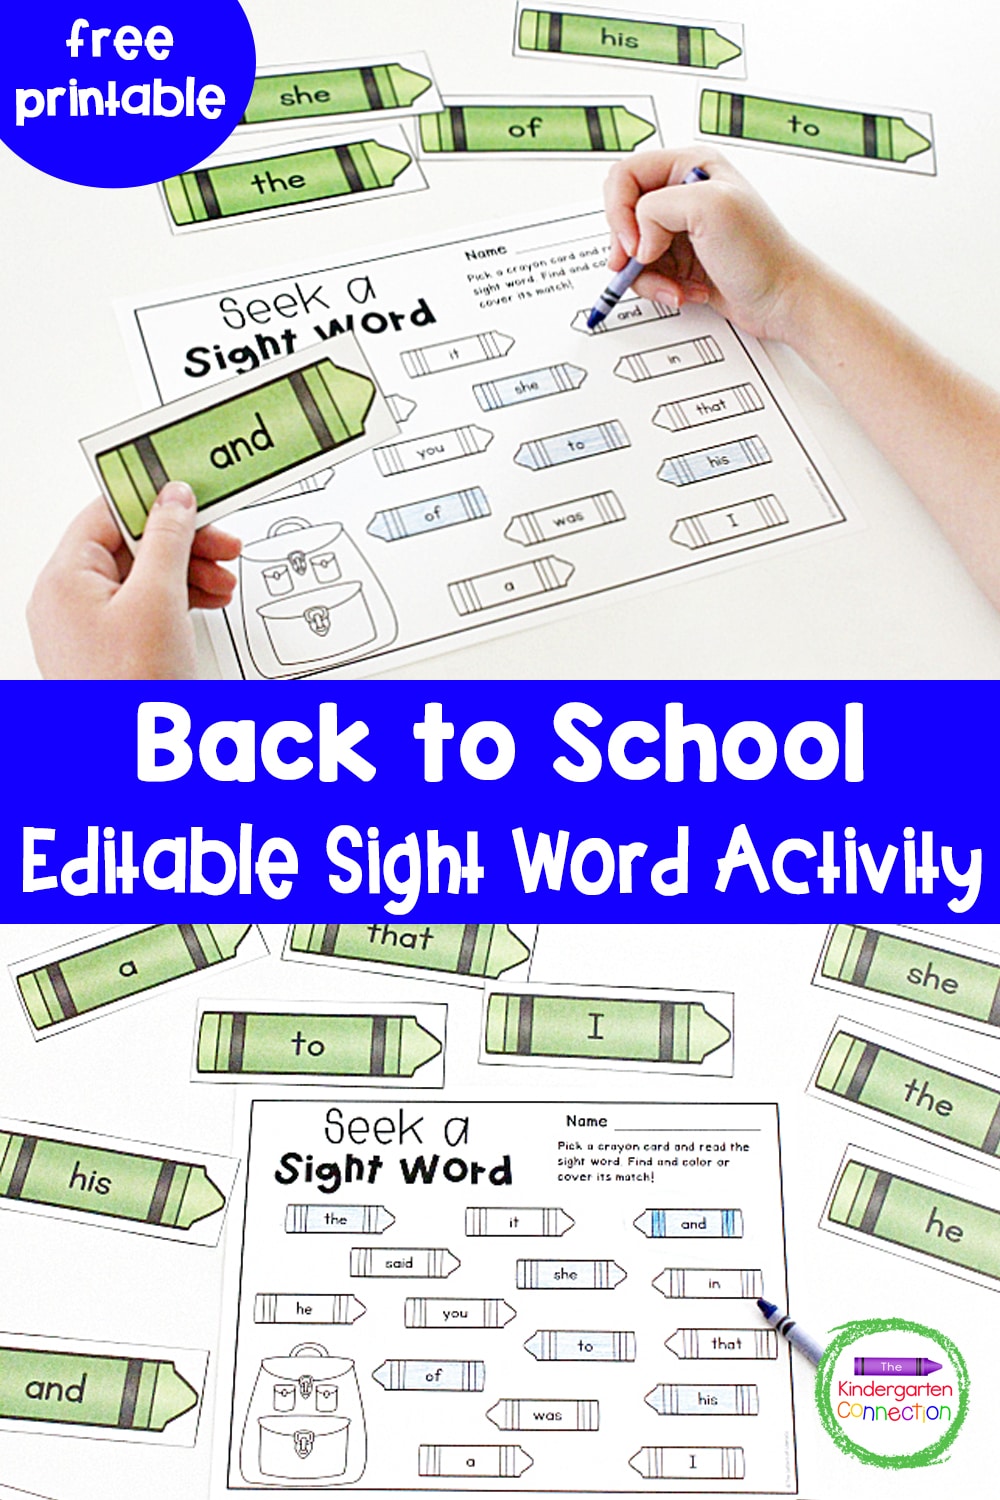 Back to School Editable Sight Word Game, FREE Printable for Kindergarten!